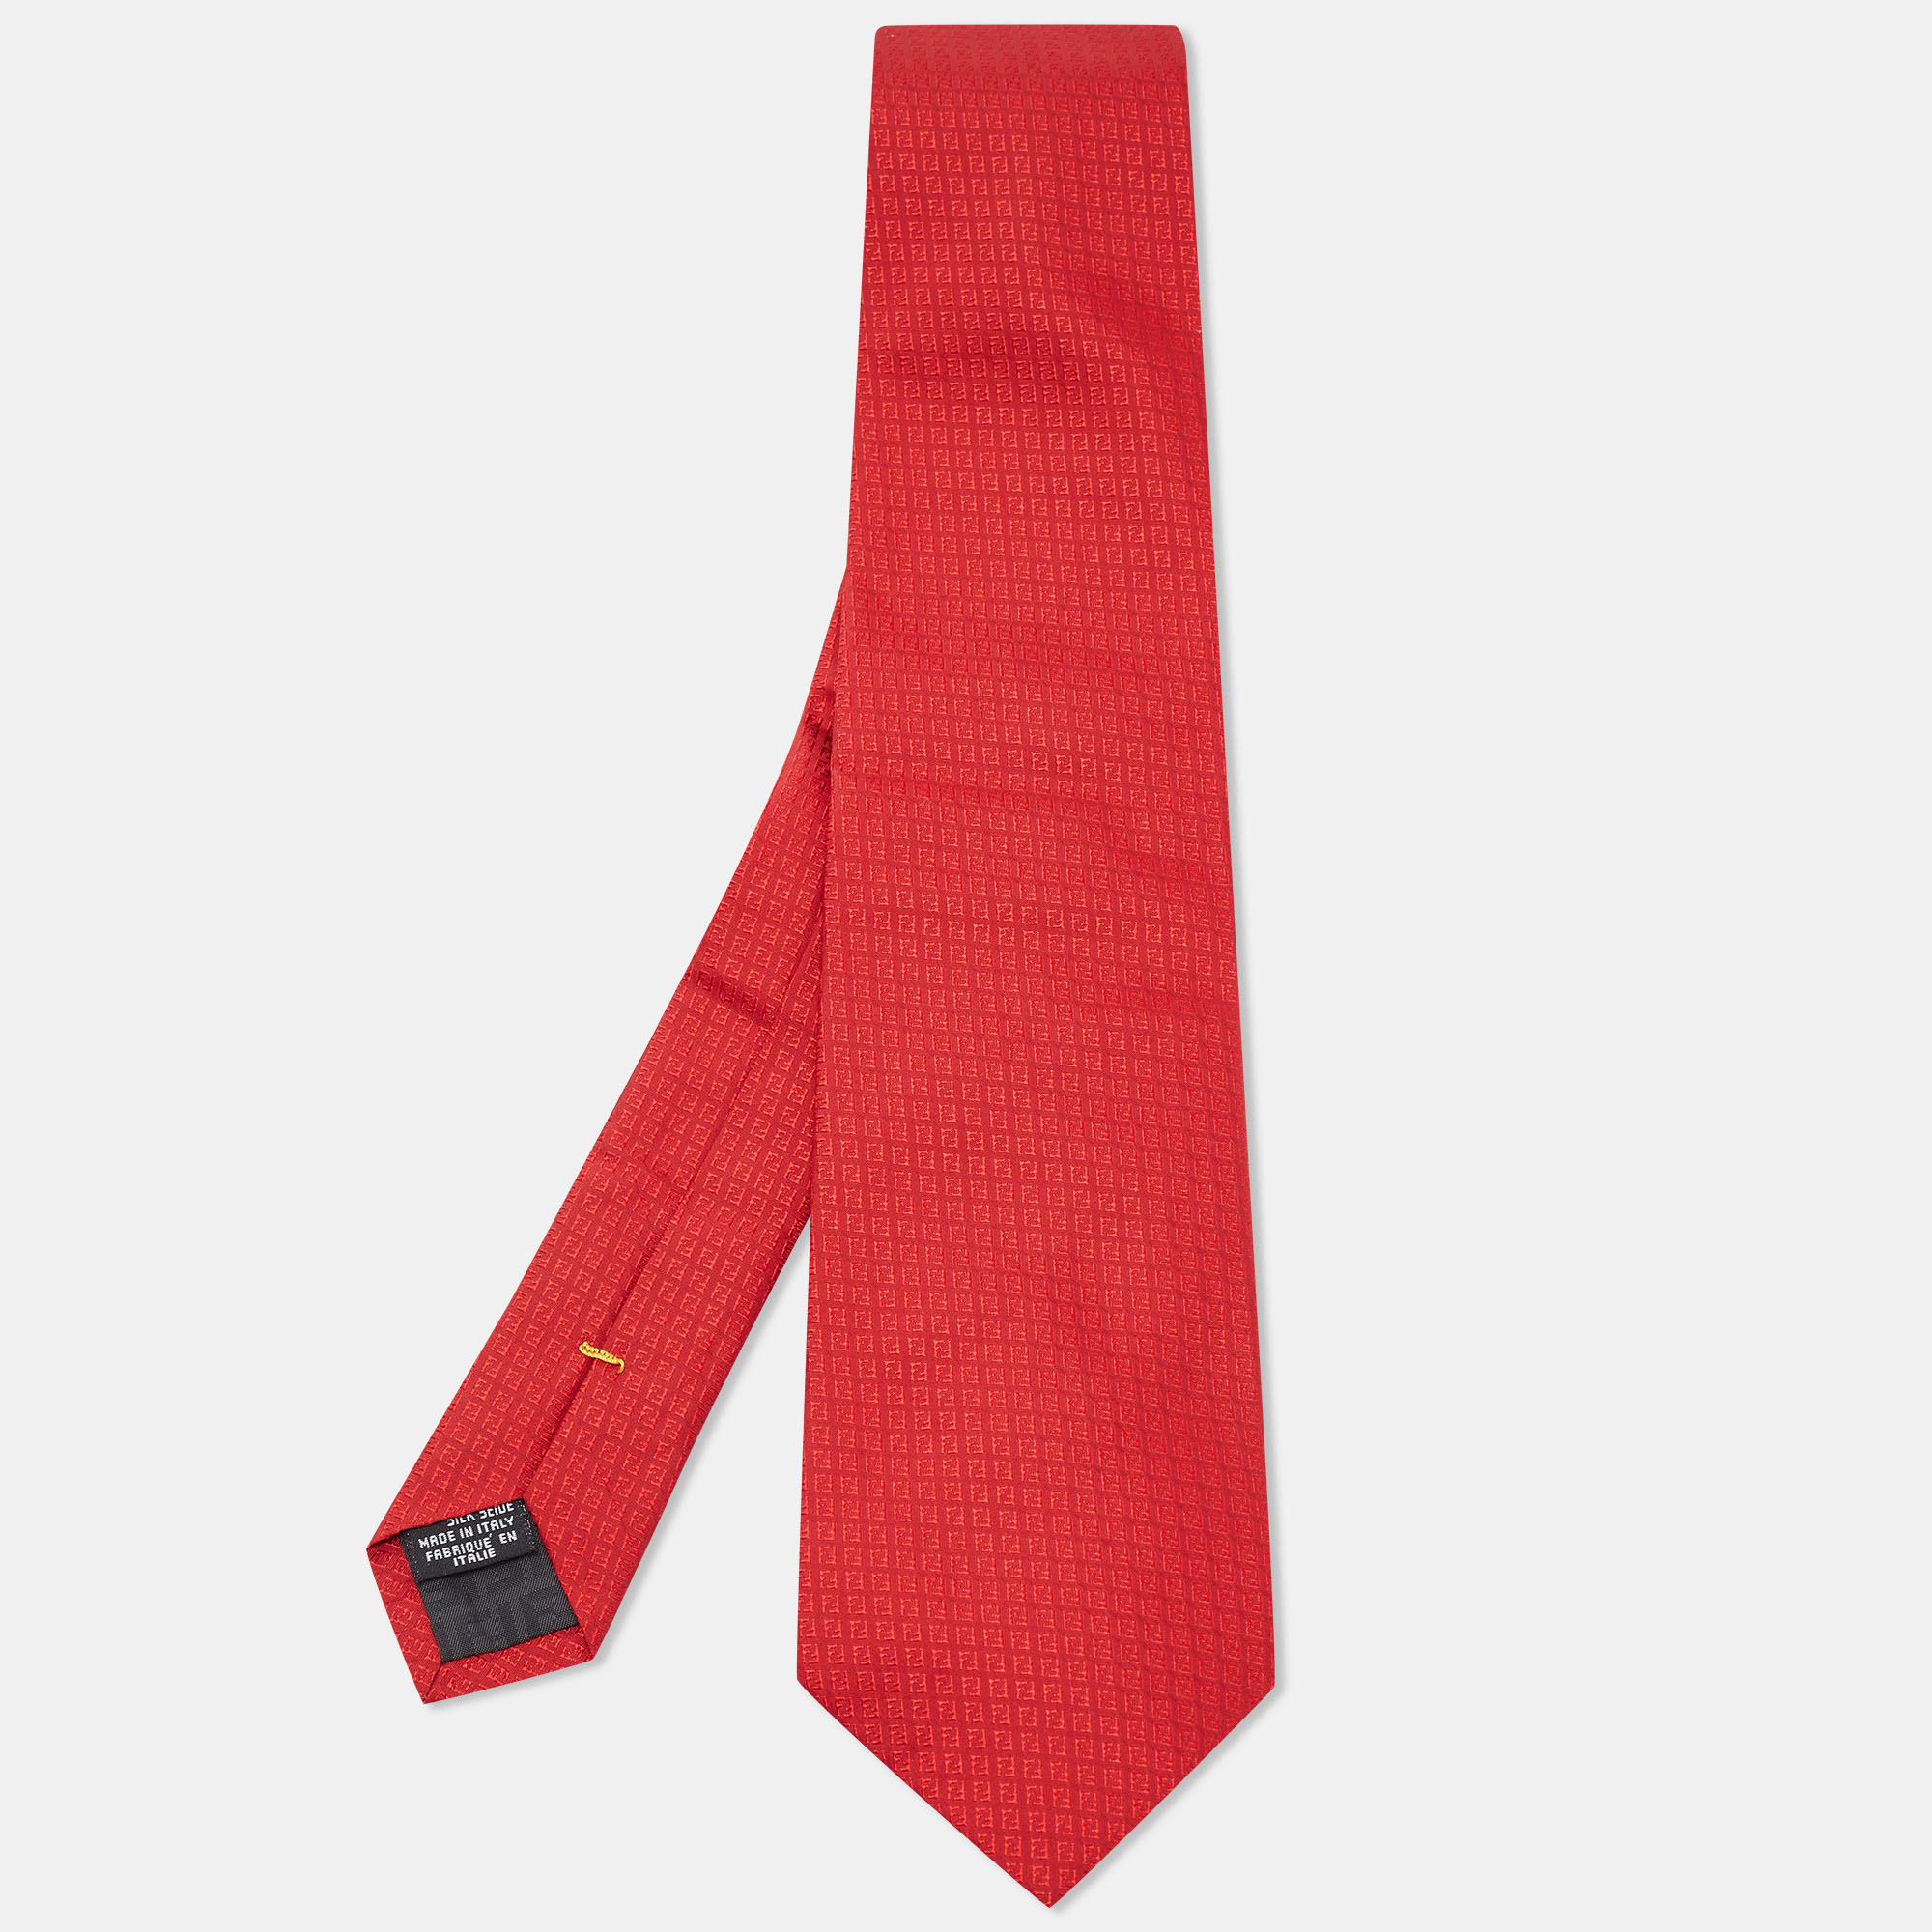 Fendi red ff patterned silk tie